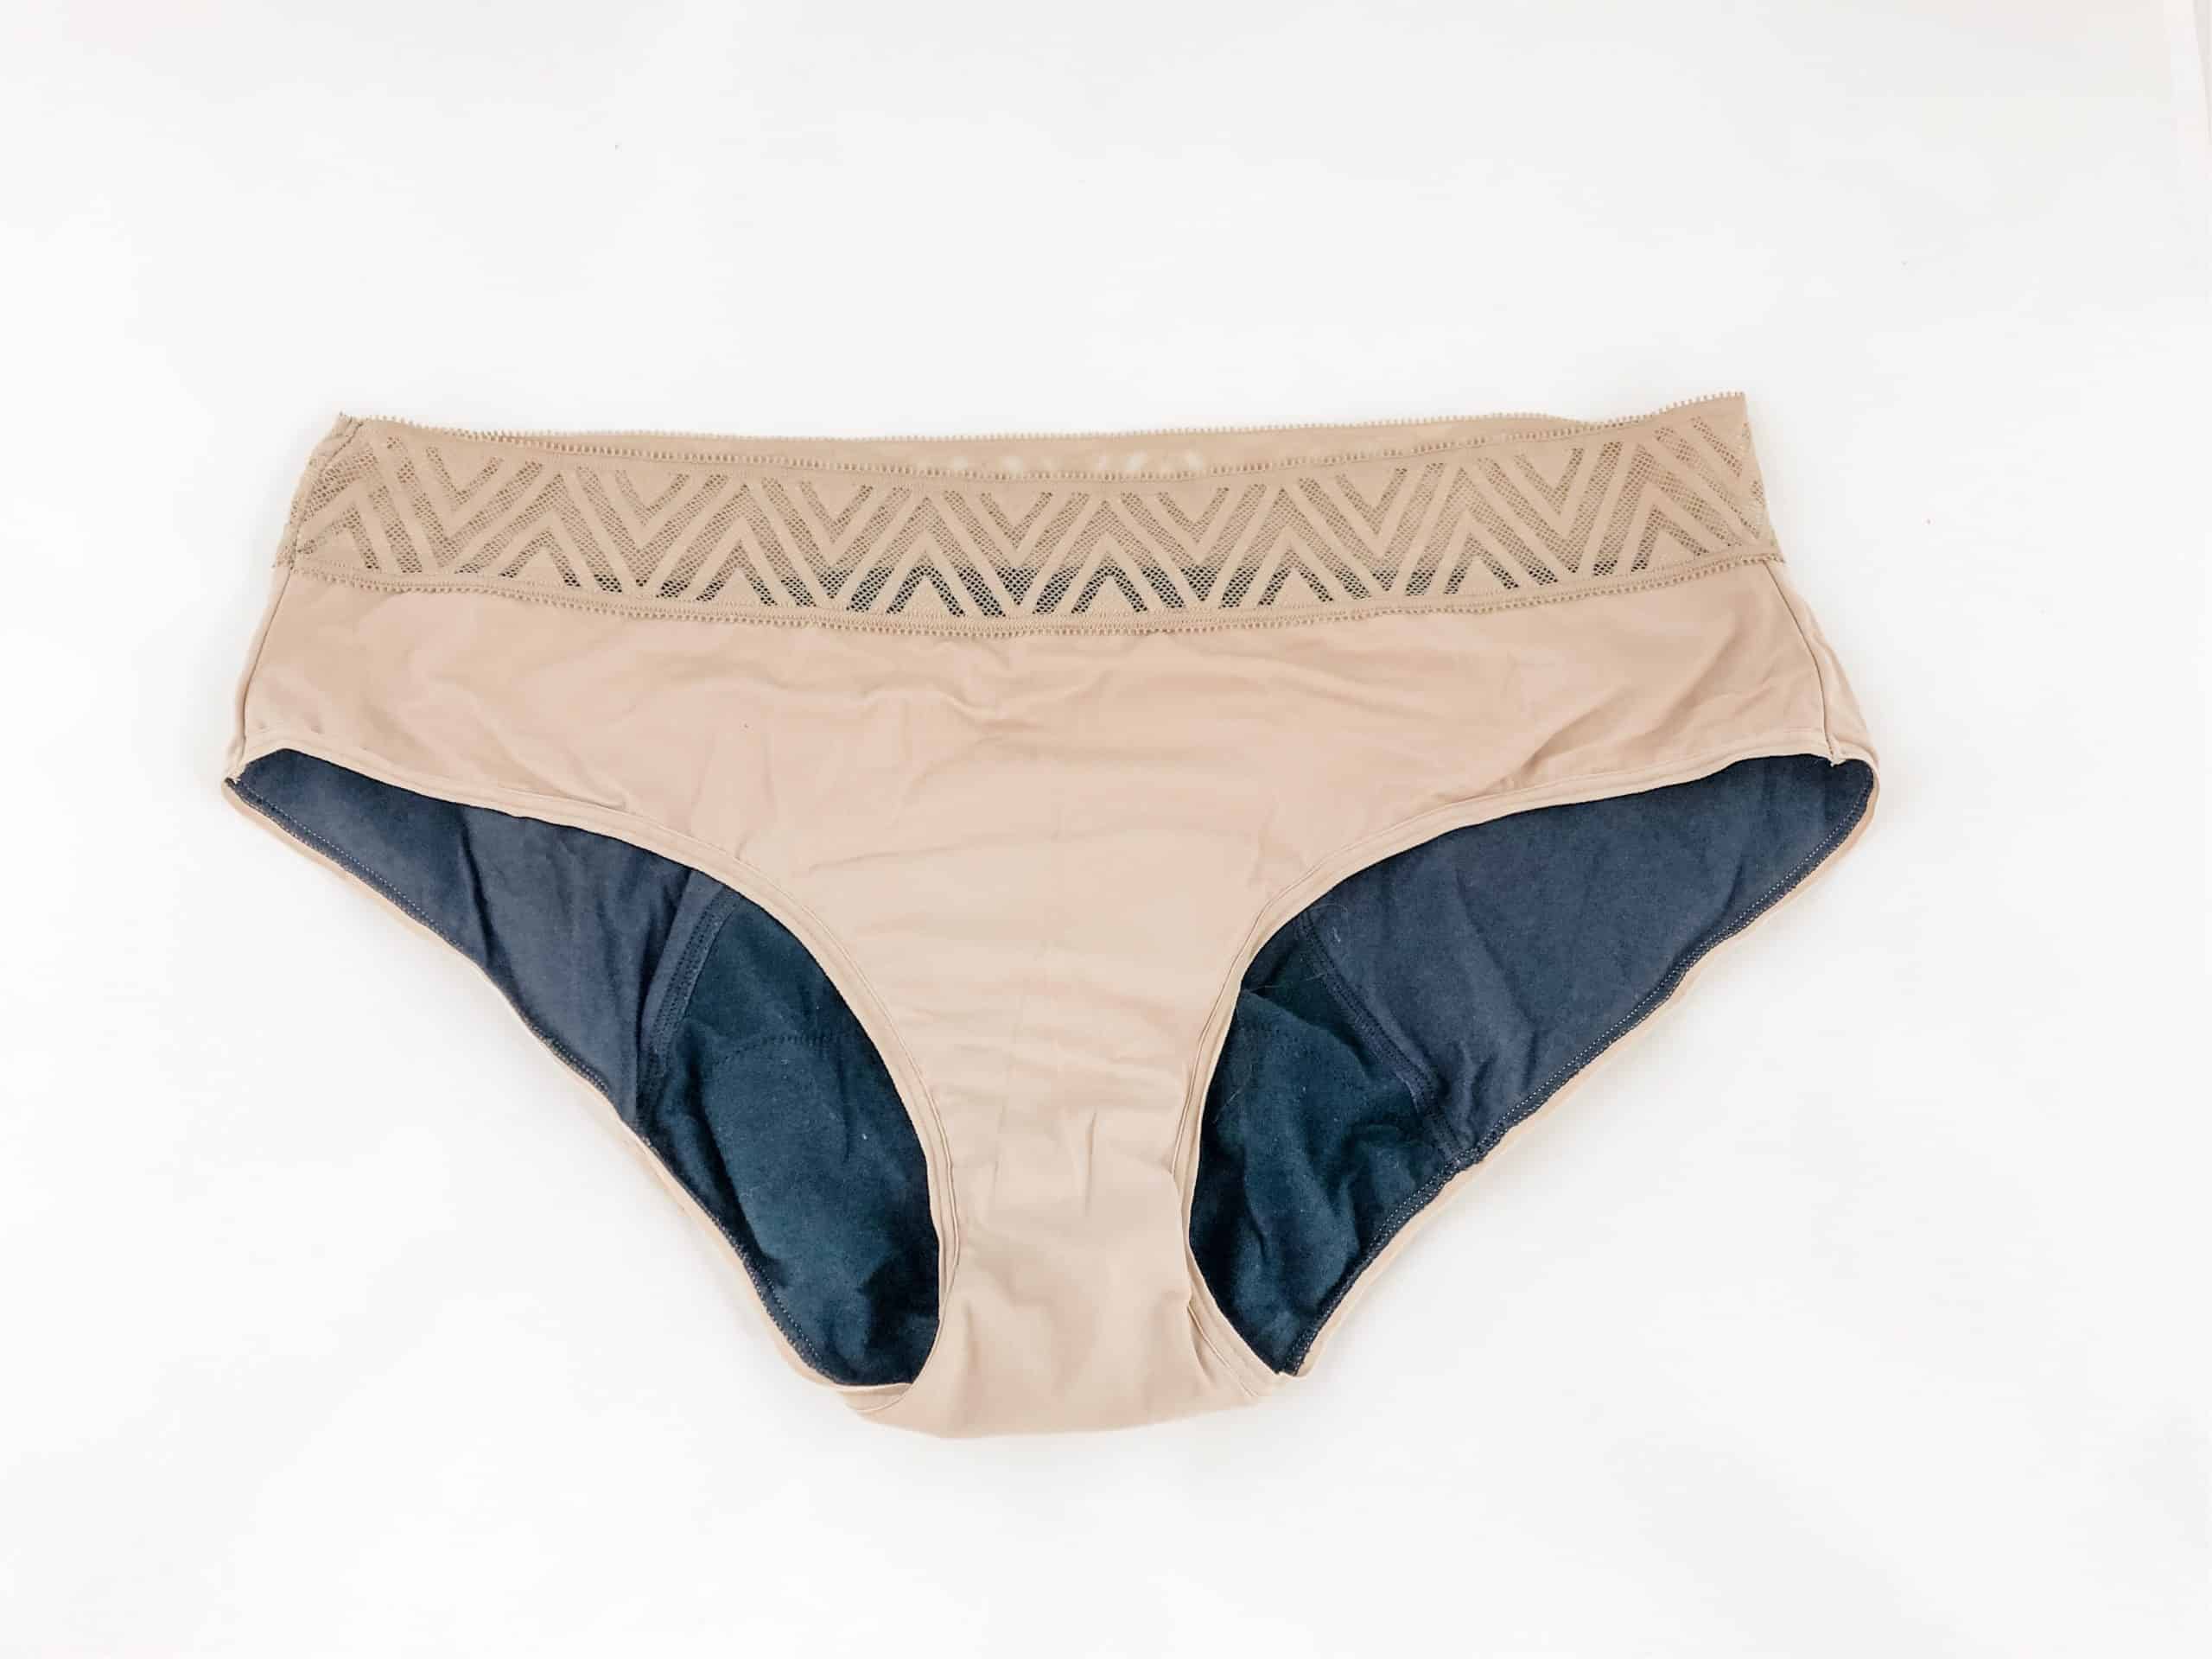  Rdiner Heavy Flow High Absorbency Period Underwear Women